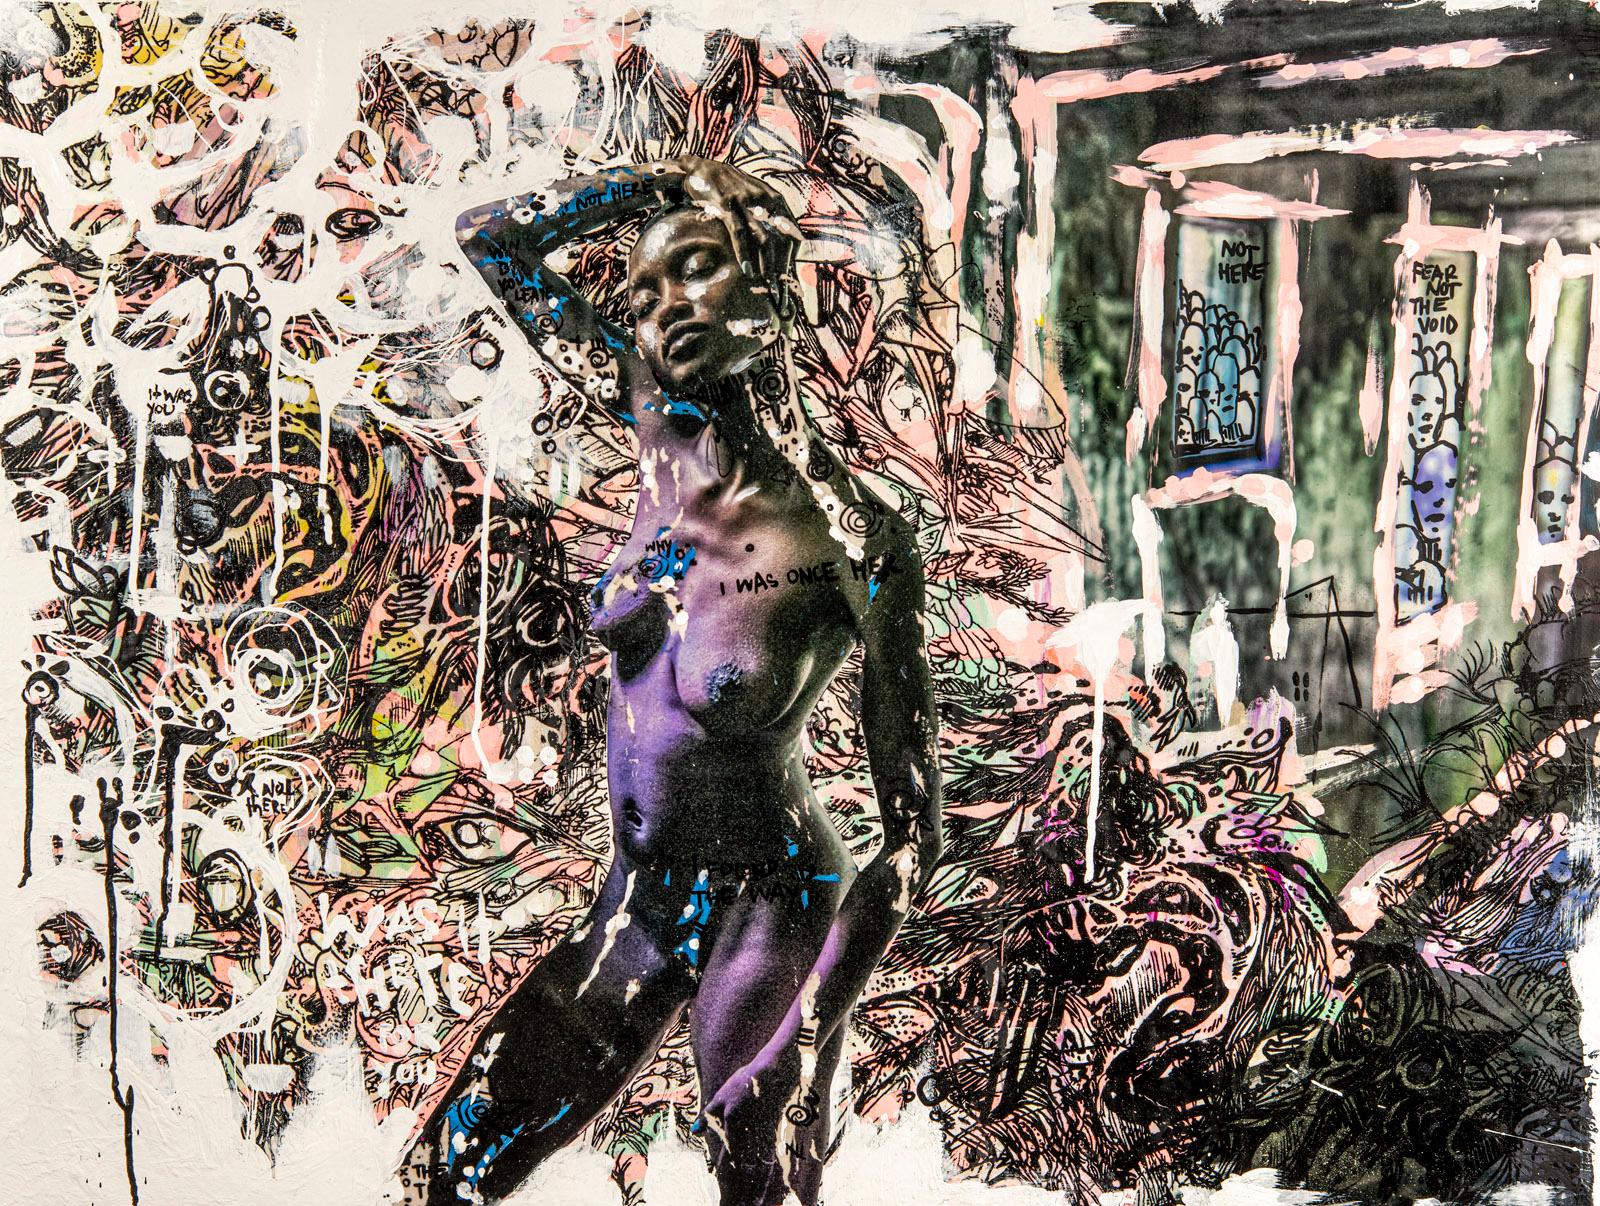 "Serenity of Chaos"- Mixed Media Photograph & Painting Collaboration - Mixed Media Art by John Mazlish